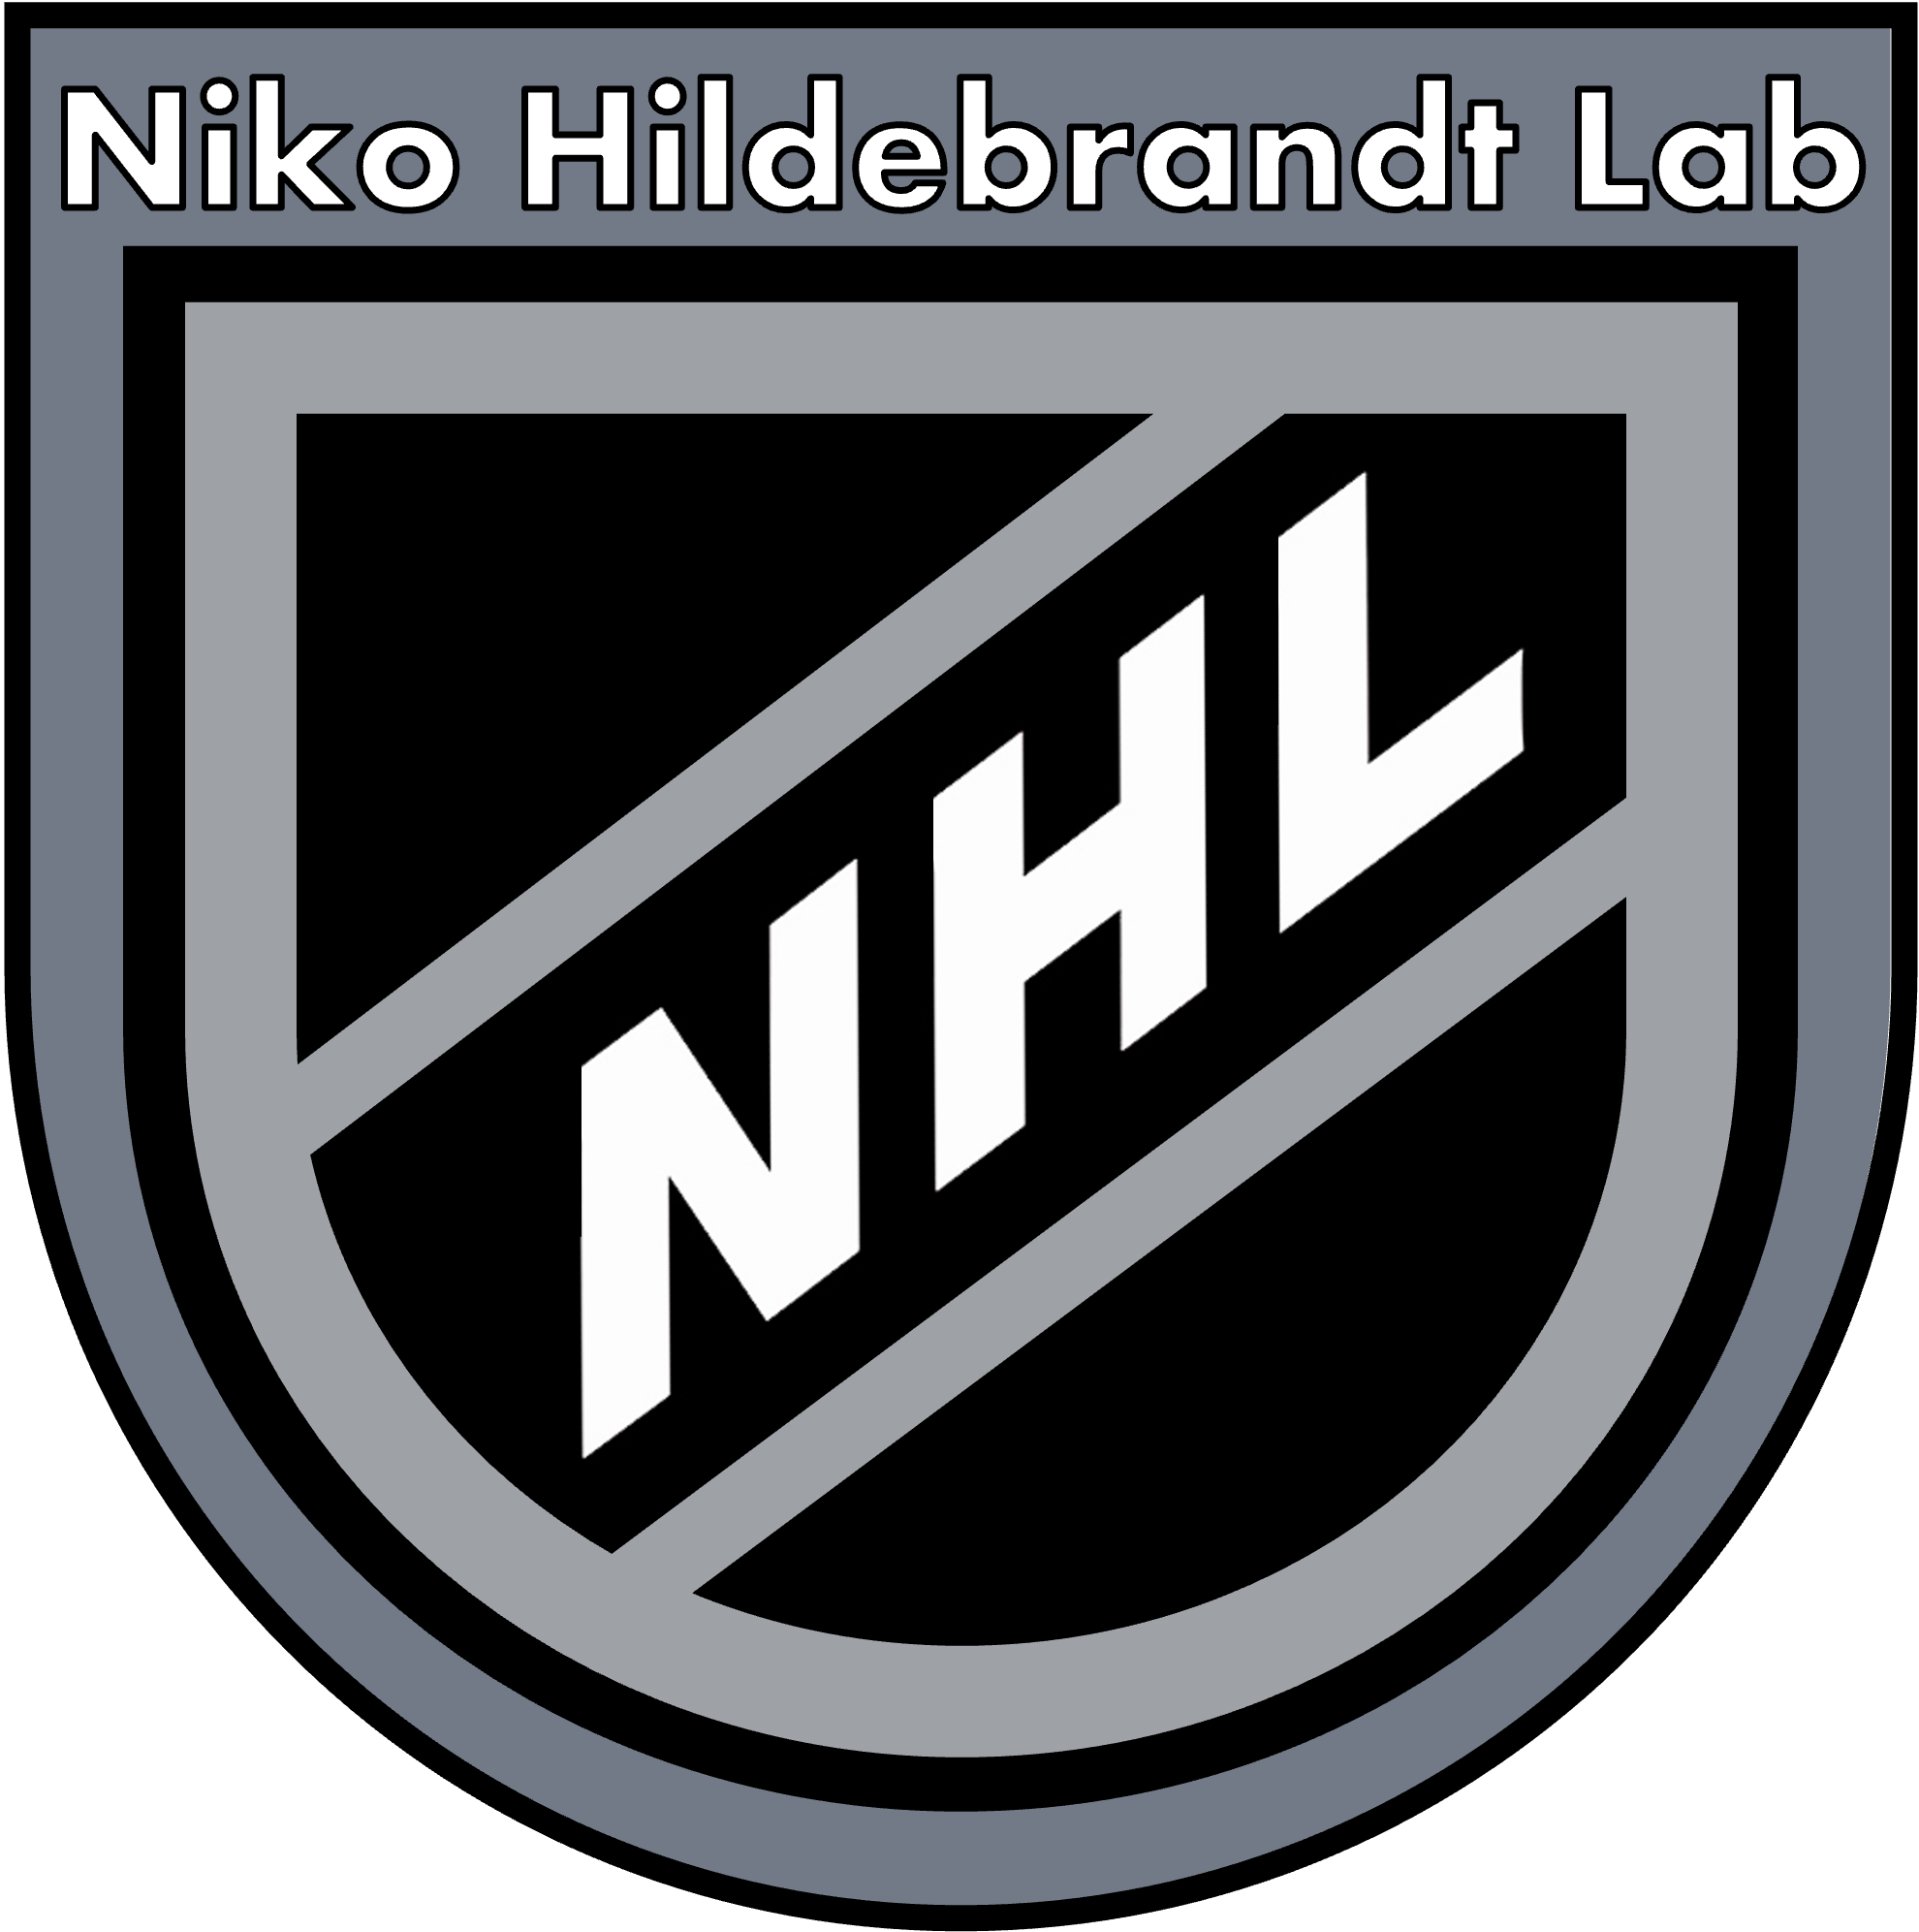 Niko Hildebrandt Lab